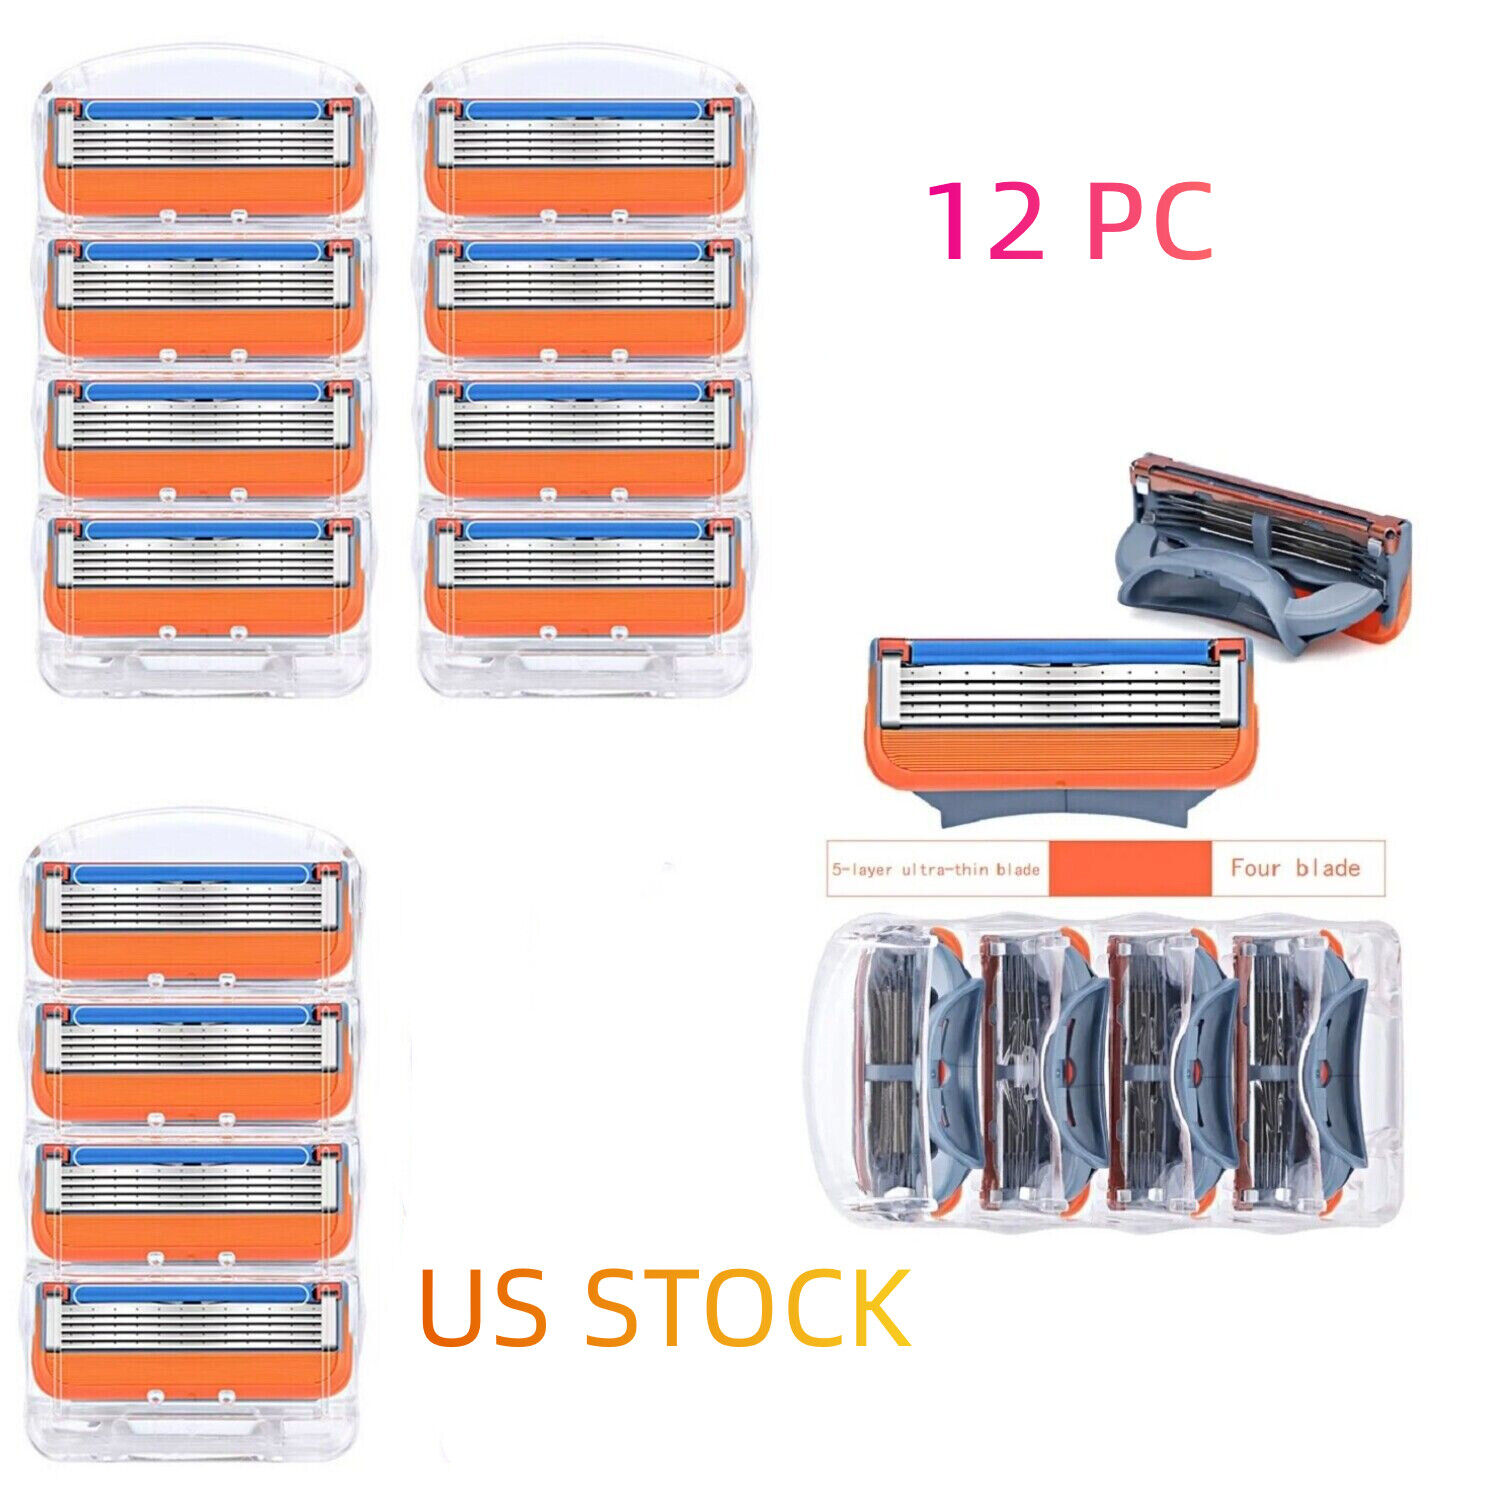 12PCS for Gillette Fusion 5-Layer Men's Razor Blade Refills Orange in stock US